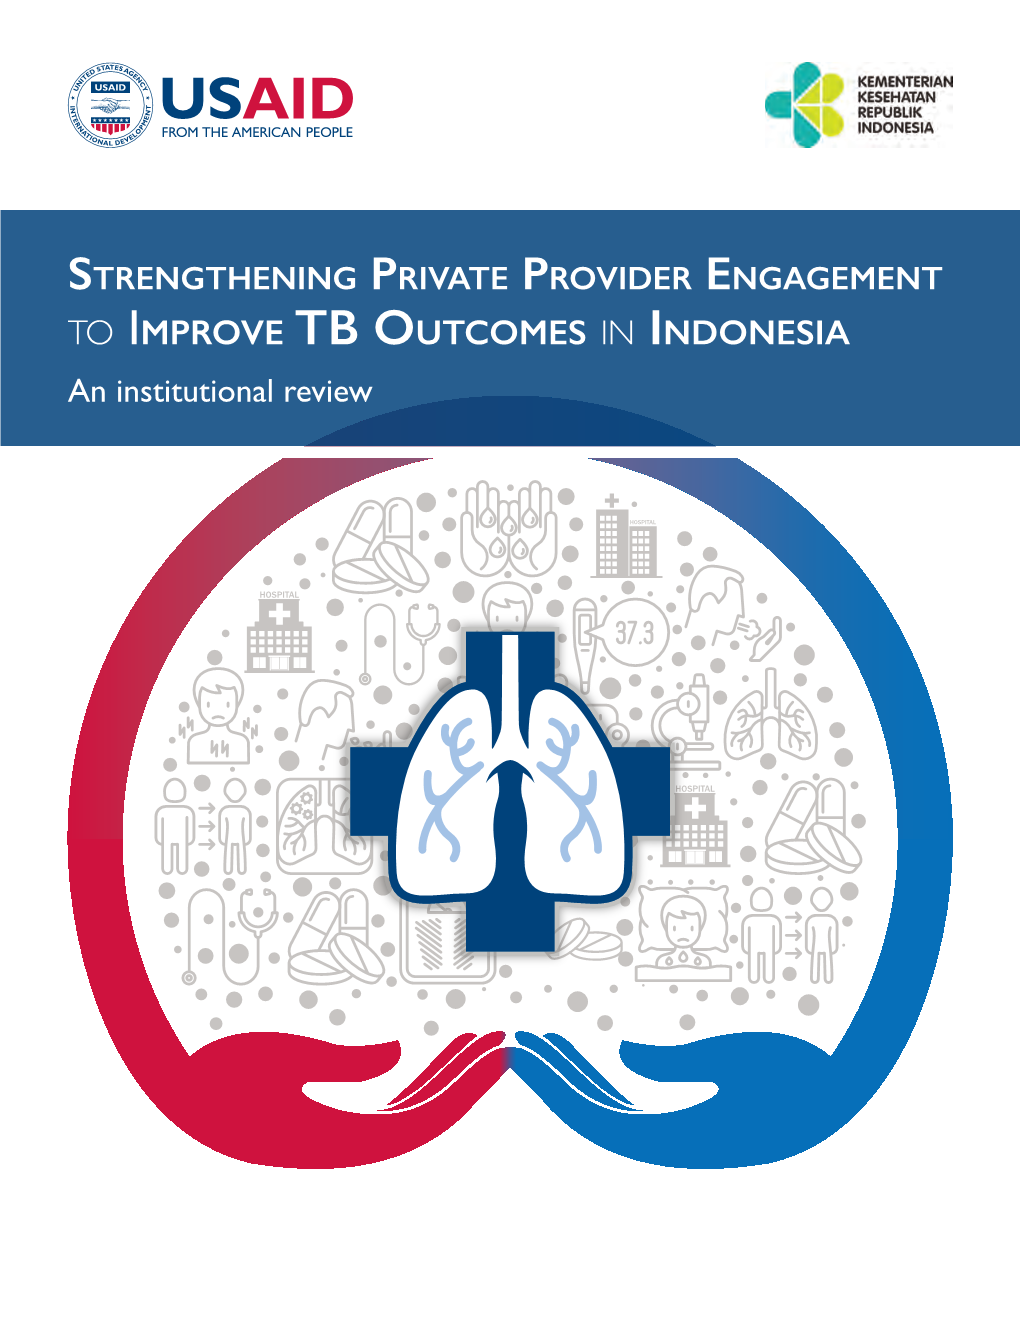 To Improve Tb Outcomes in Indonesia